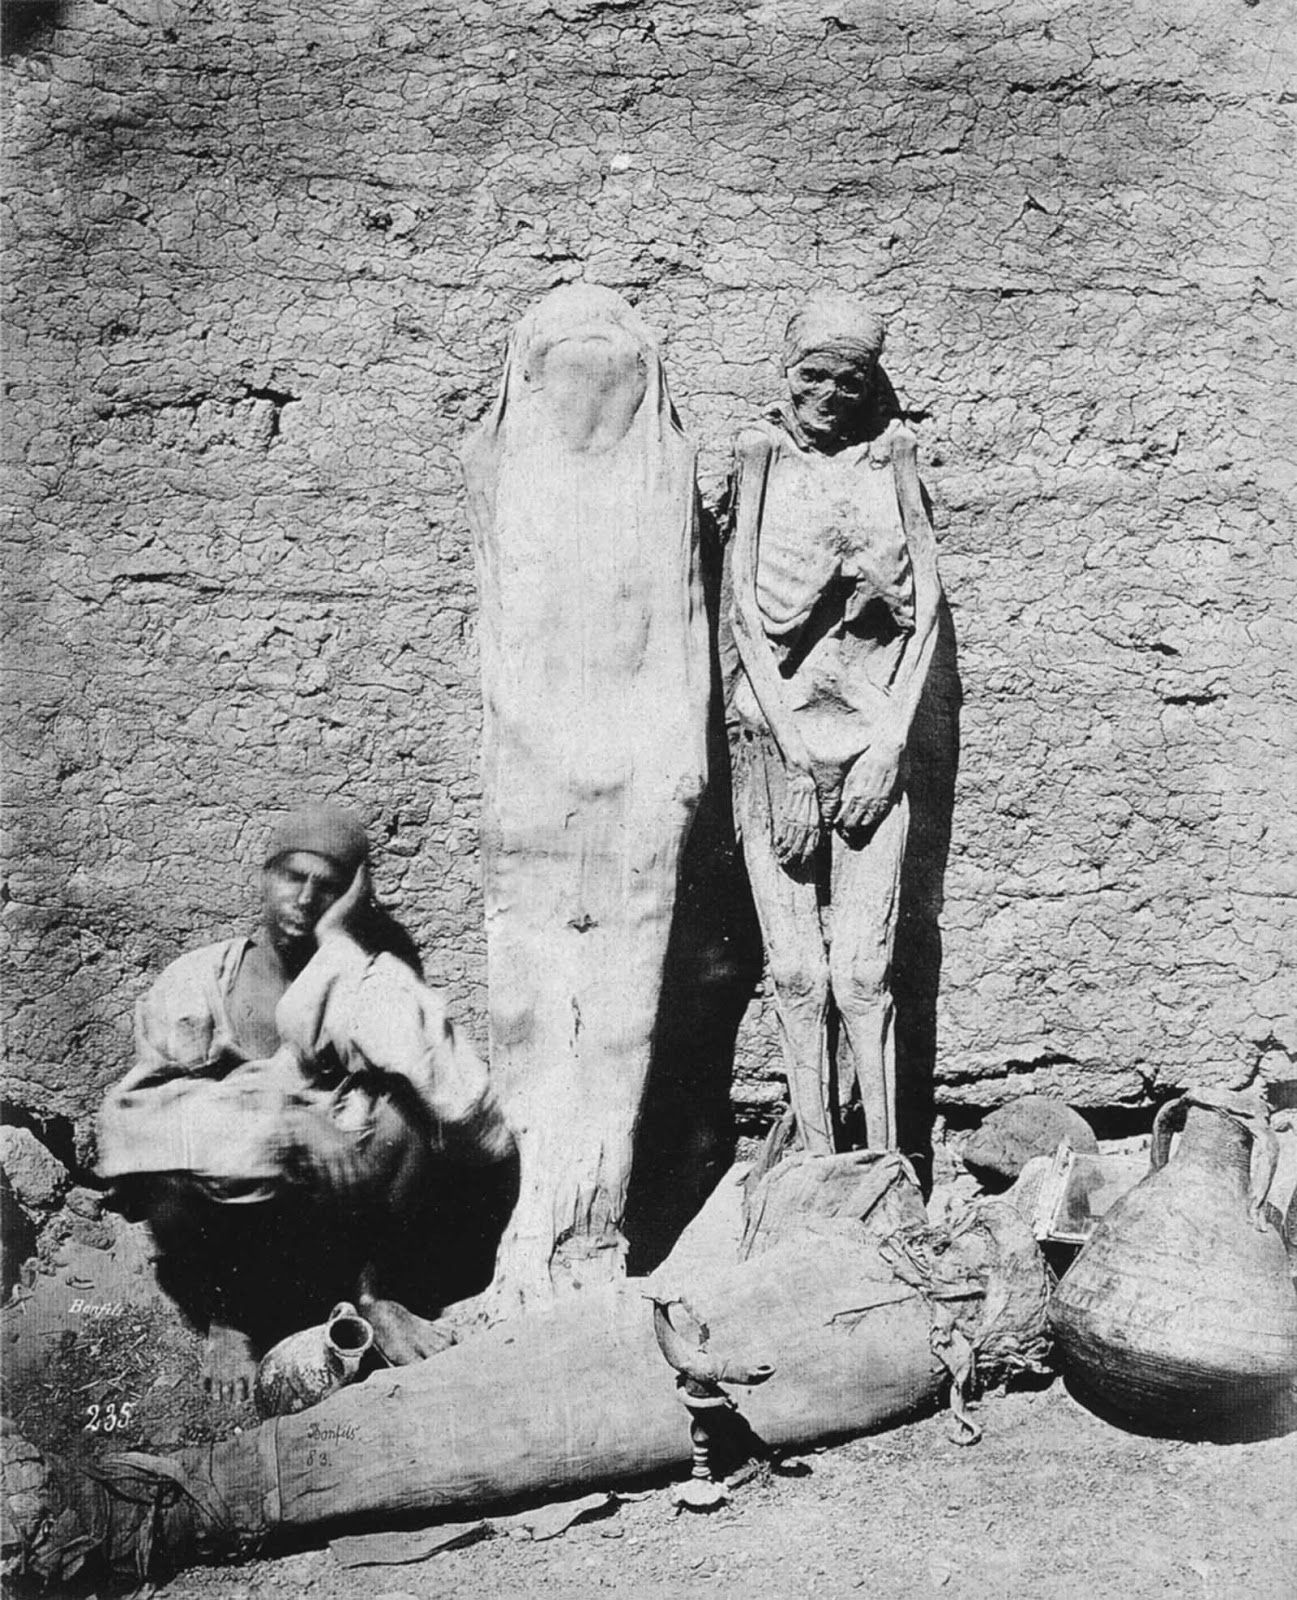 Street vendor selling mummies in Egypt, 1865